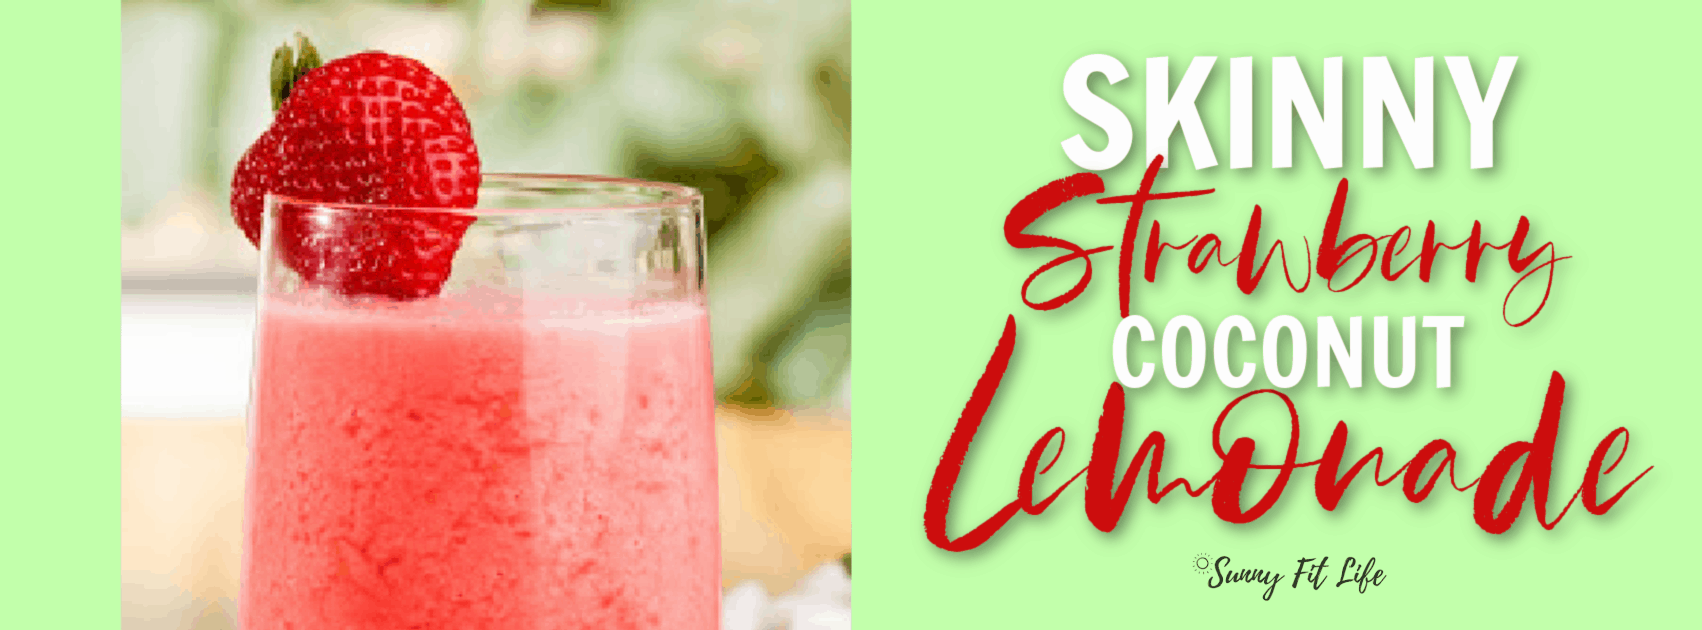 strawberry coconut lemonade detox water recipe